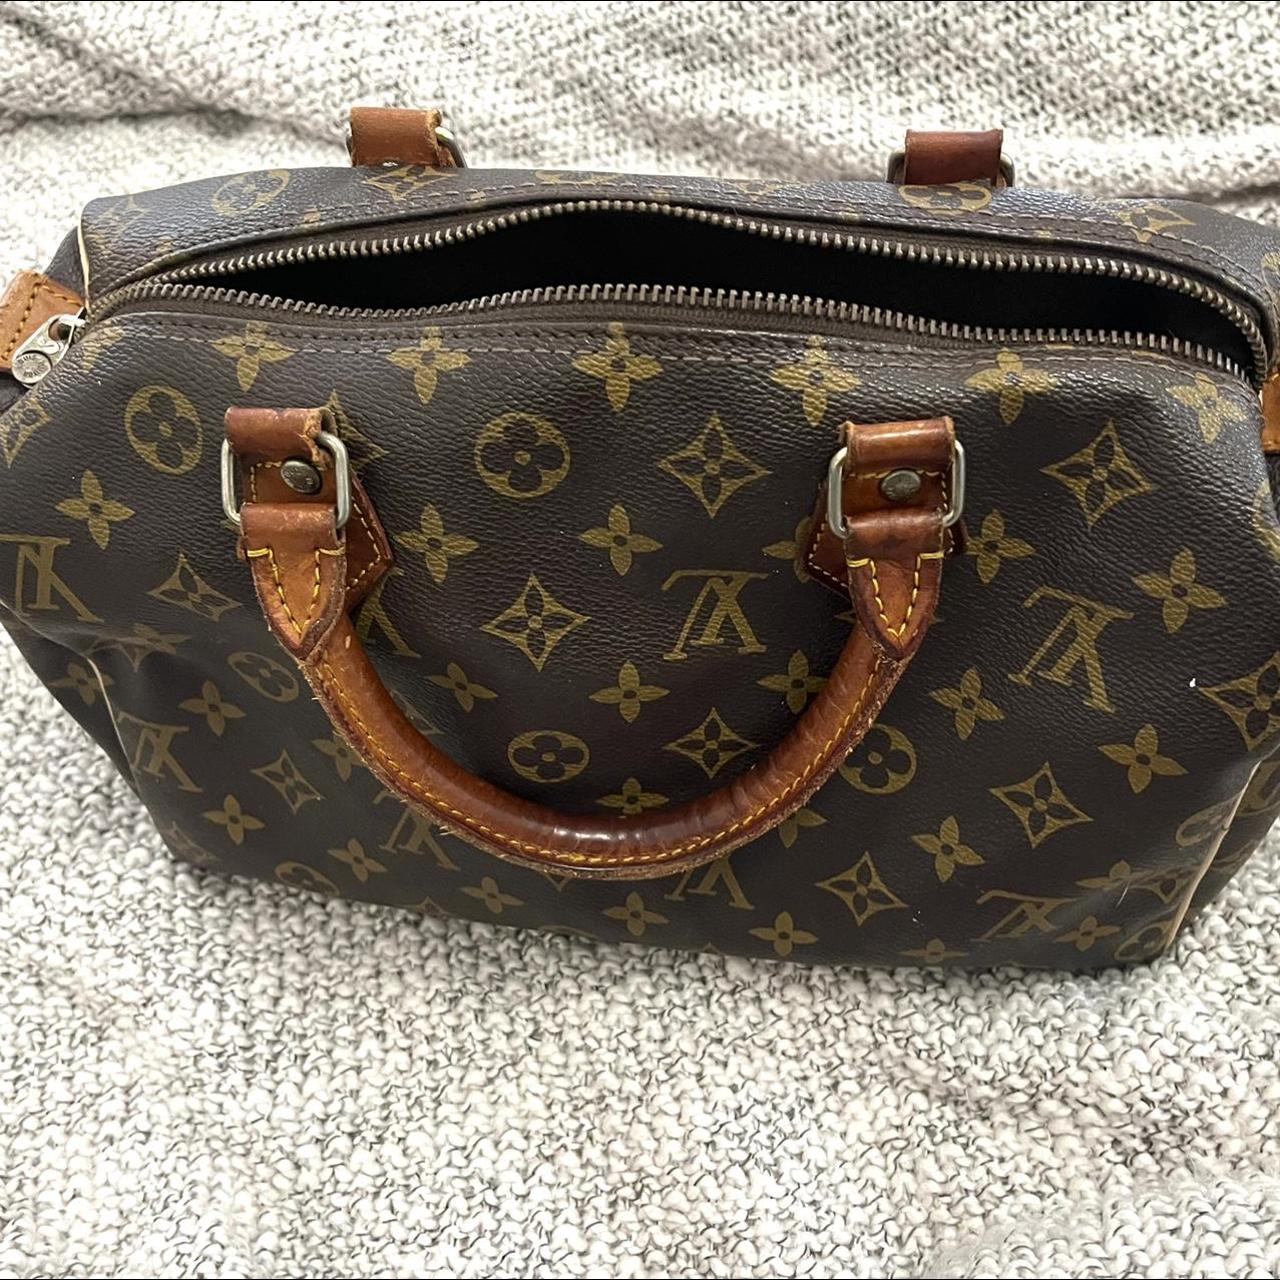 Louis Vuitton bag. Authentic. Excellent used condition.